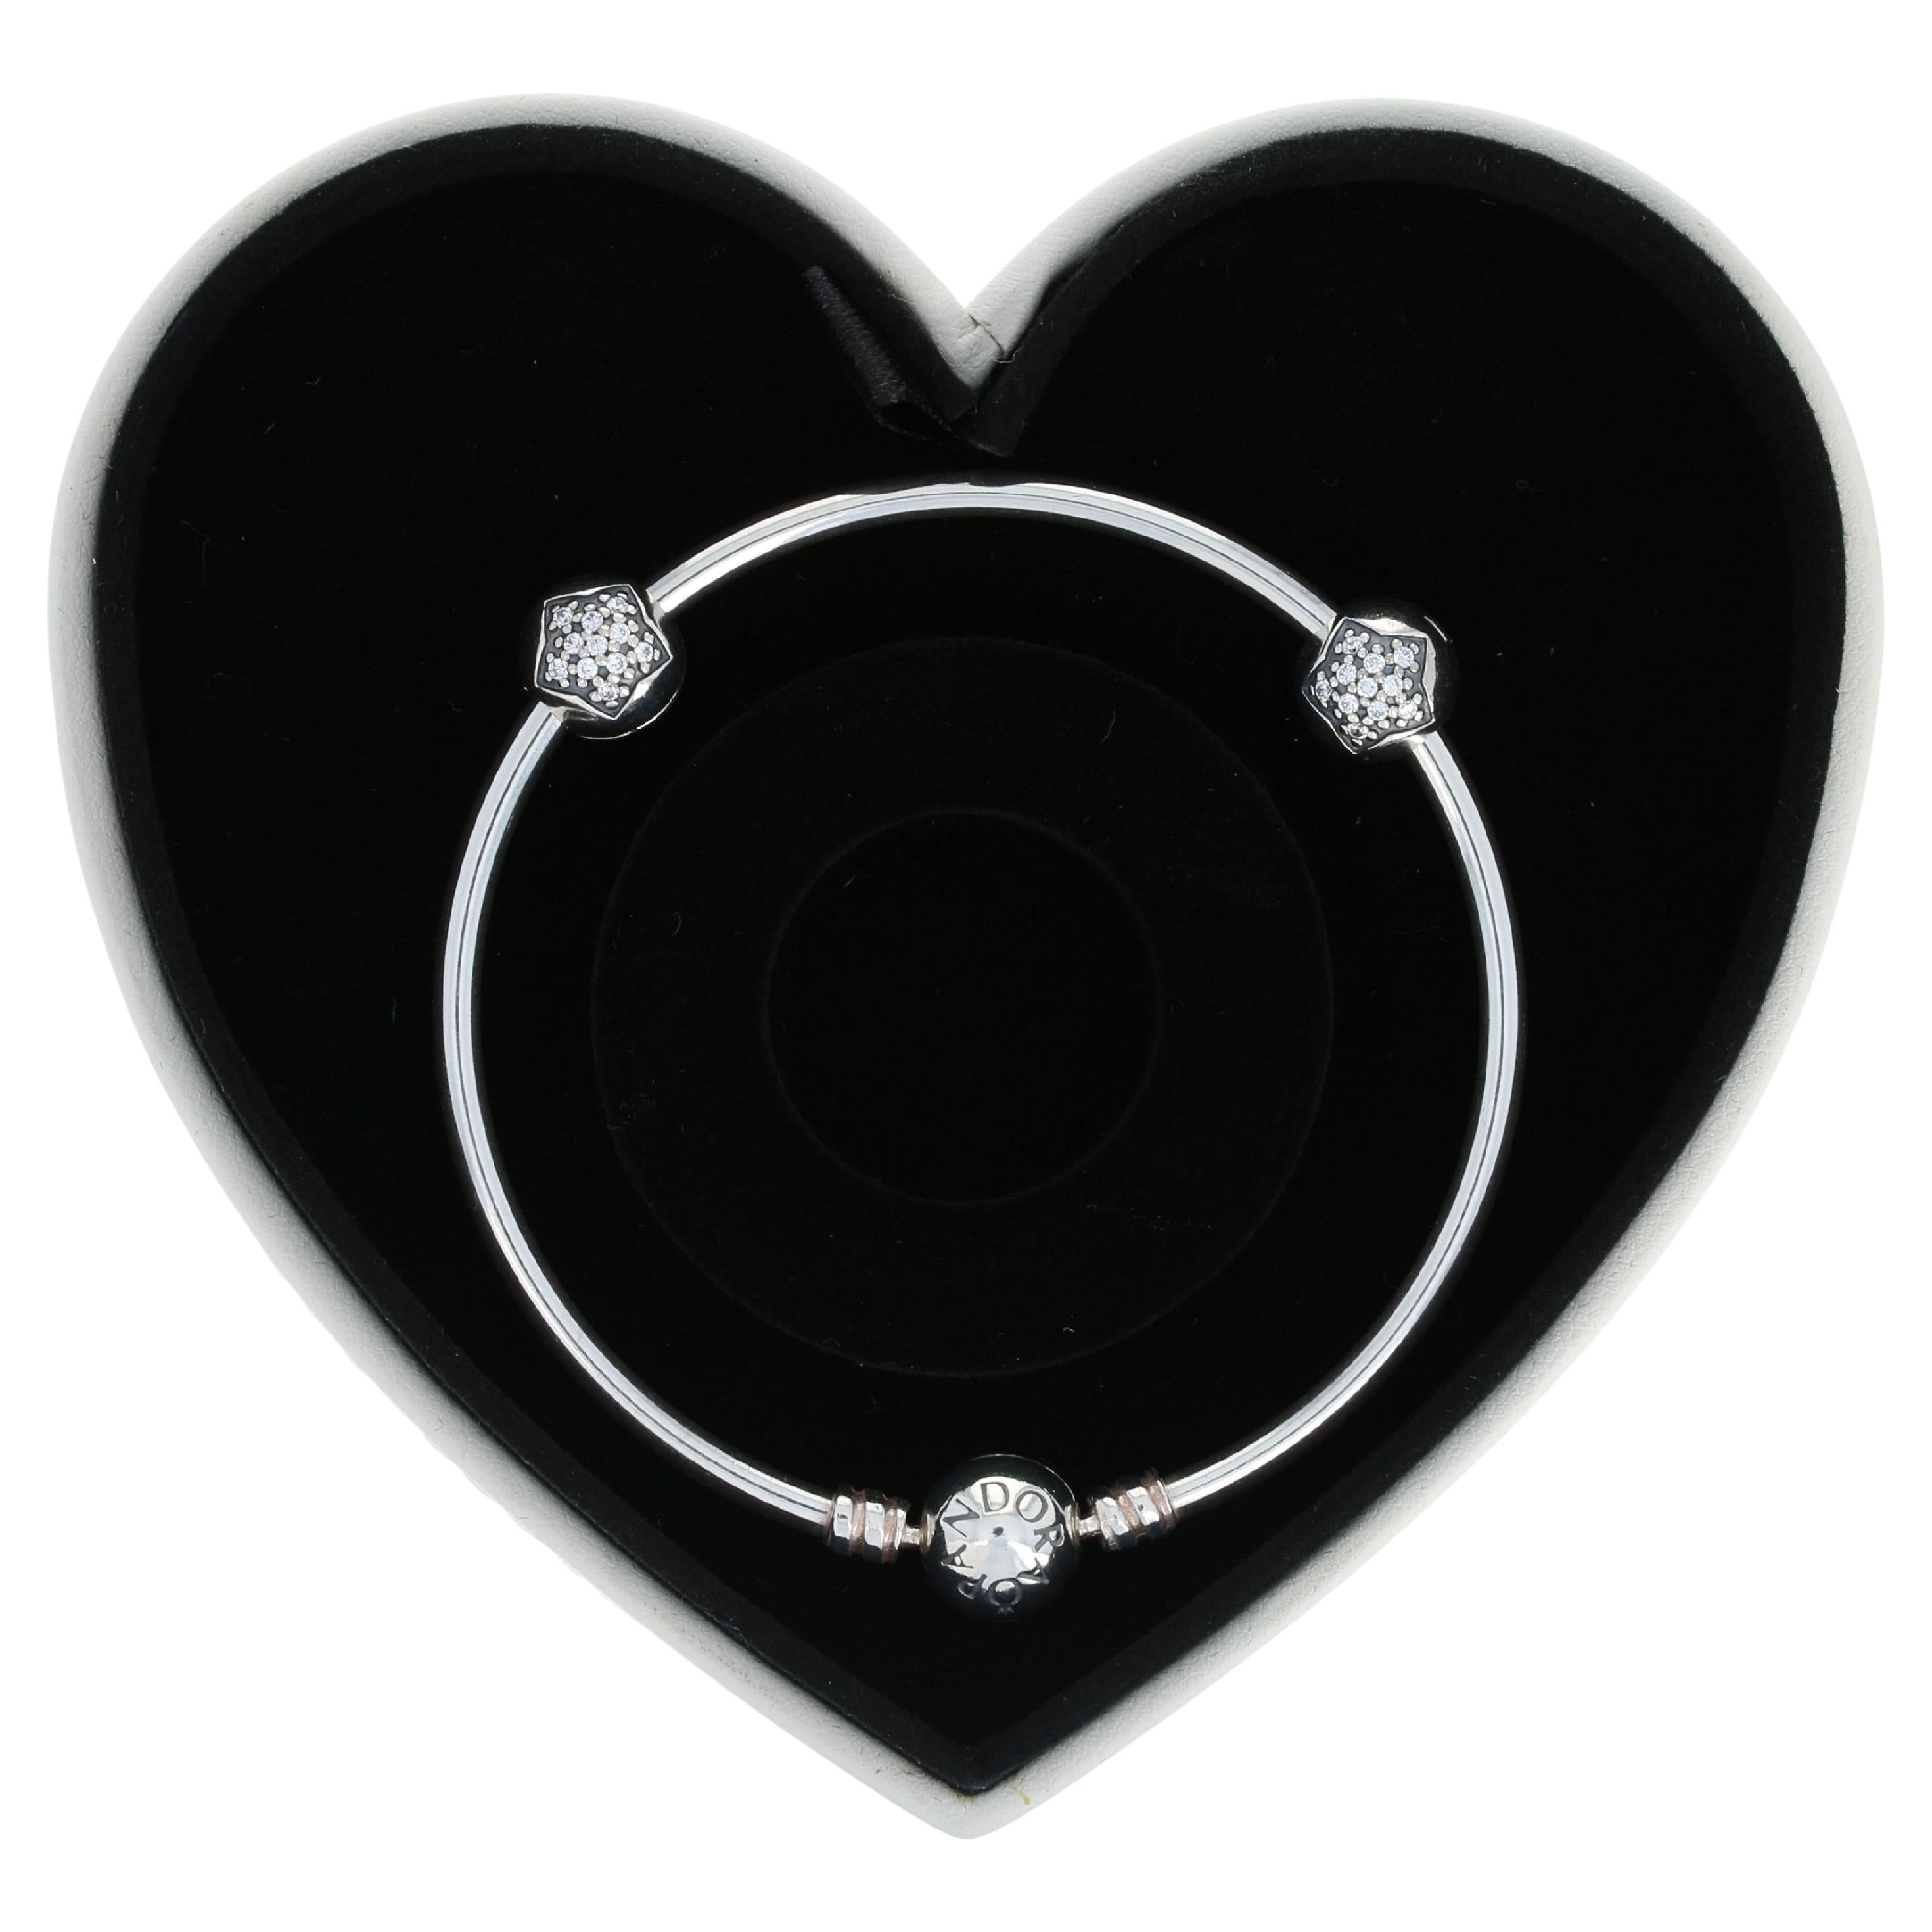 New Authentic Pandora You're a Star Gift Set Bangle Charm Bracelet USB79119